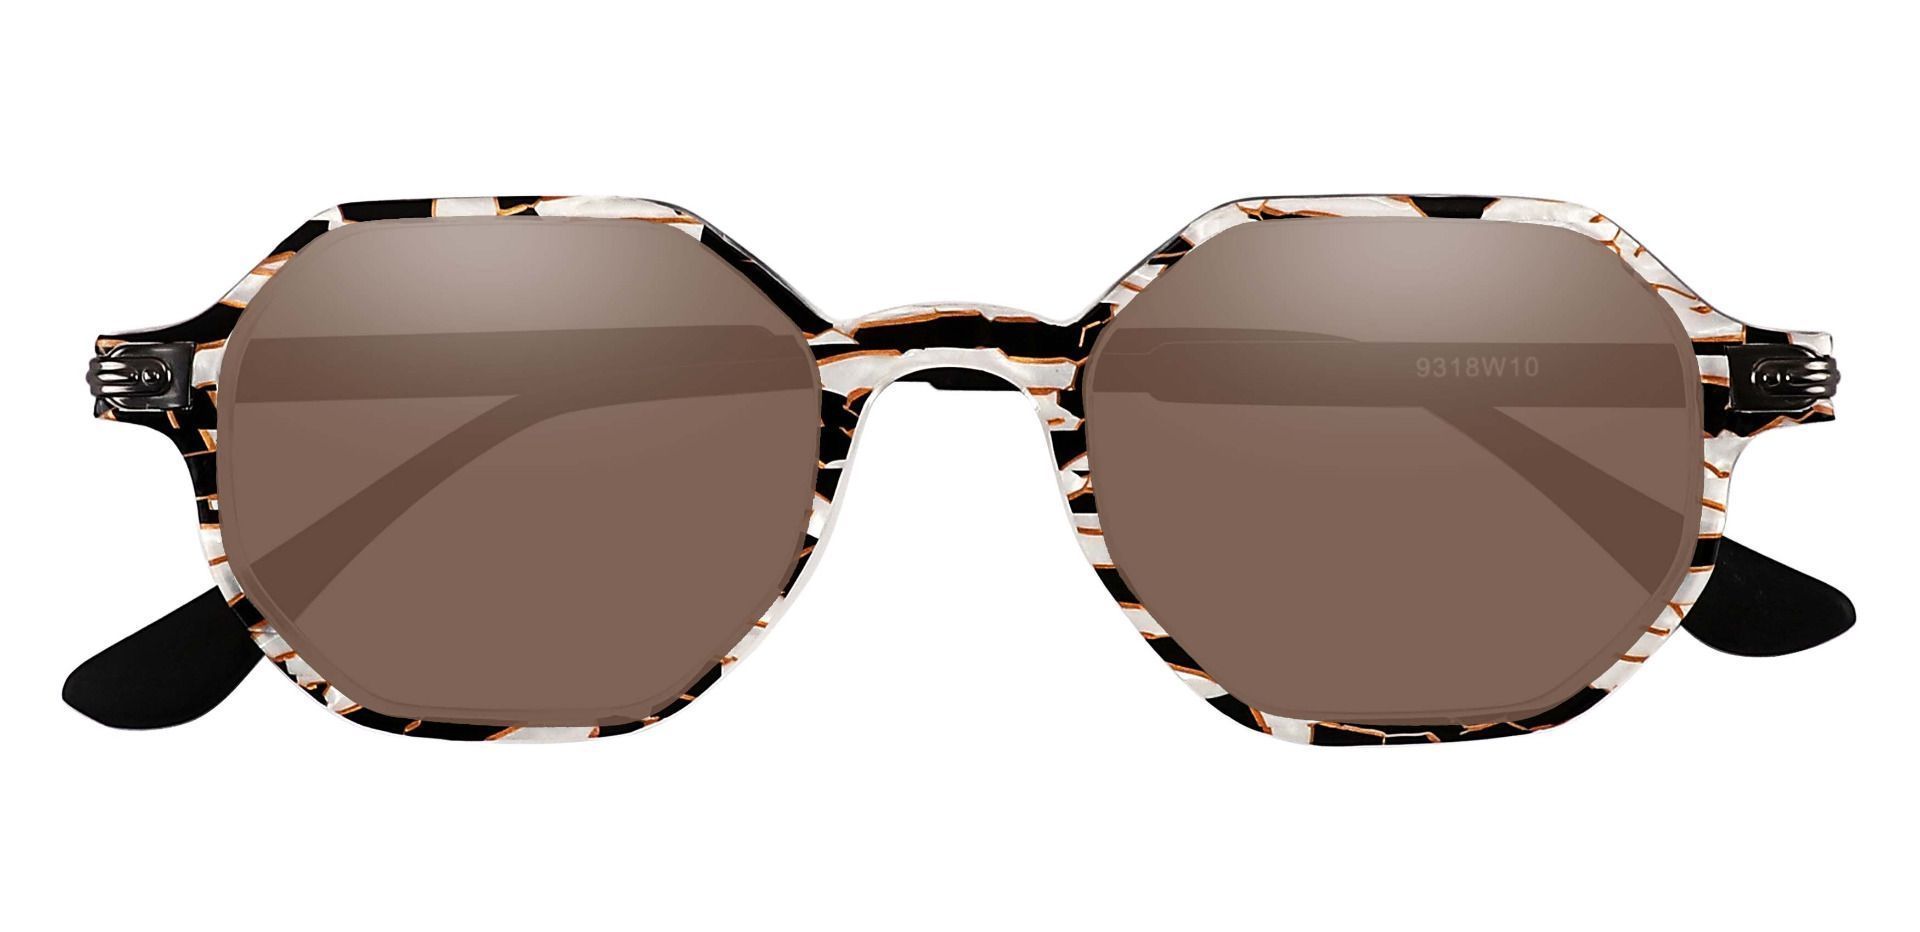 Bogart Geometric Progressive Sunglasses - Floral Frame With Brown Lenses